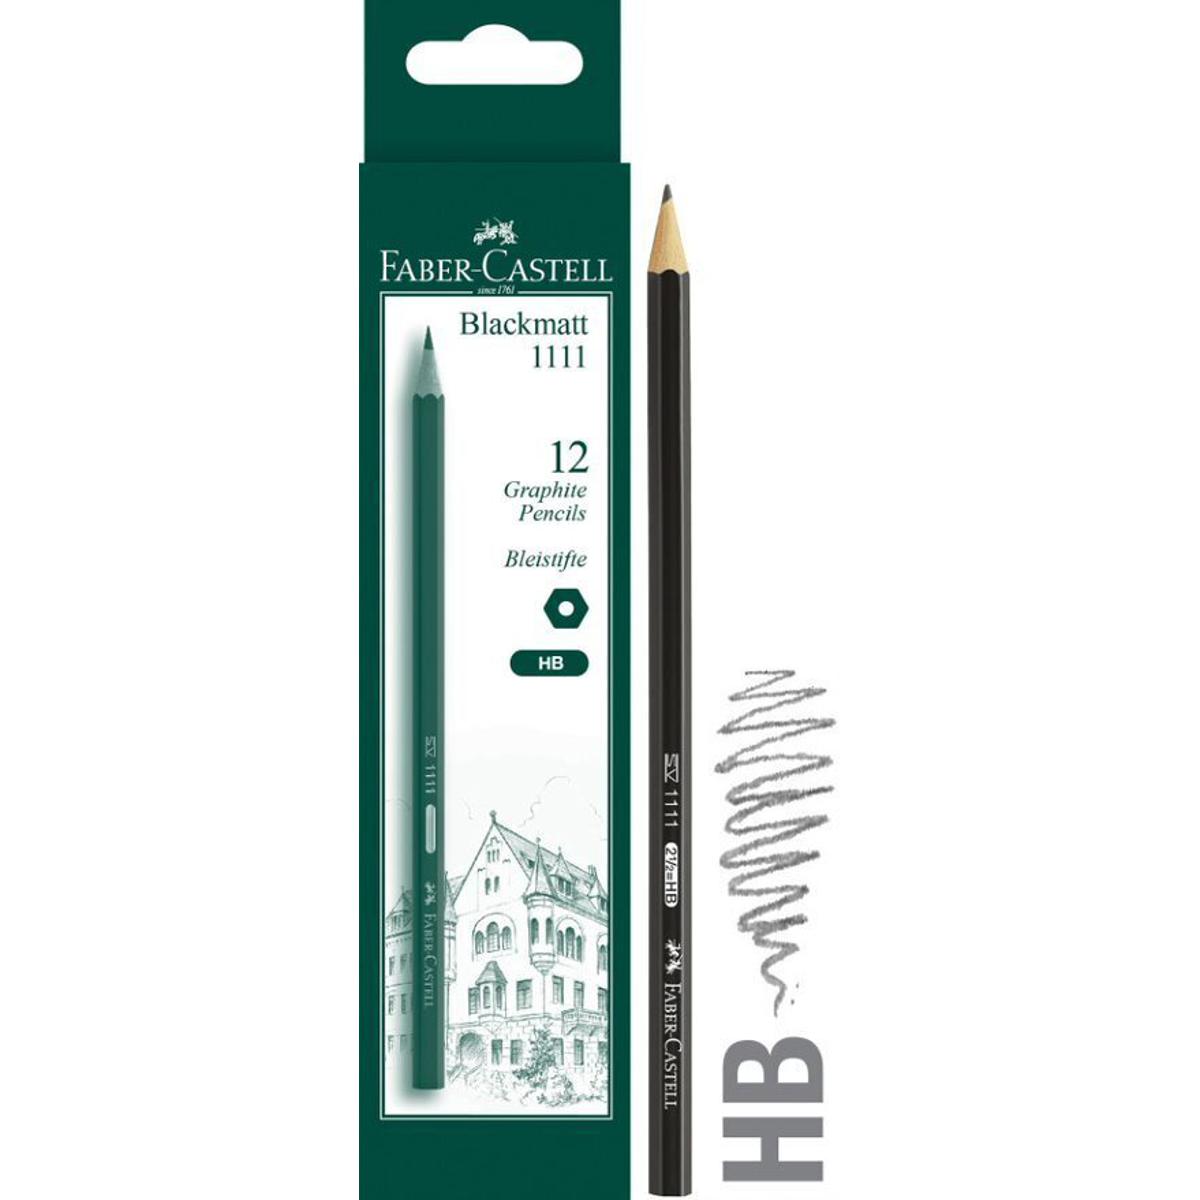 Faber Castell Black Matt Graphite Pencil HB 1111 Pack of 12